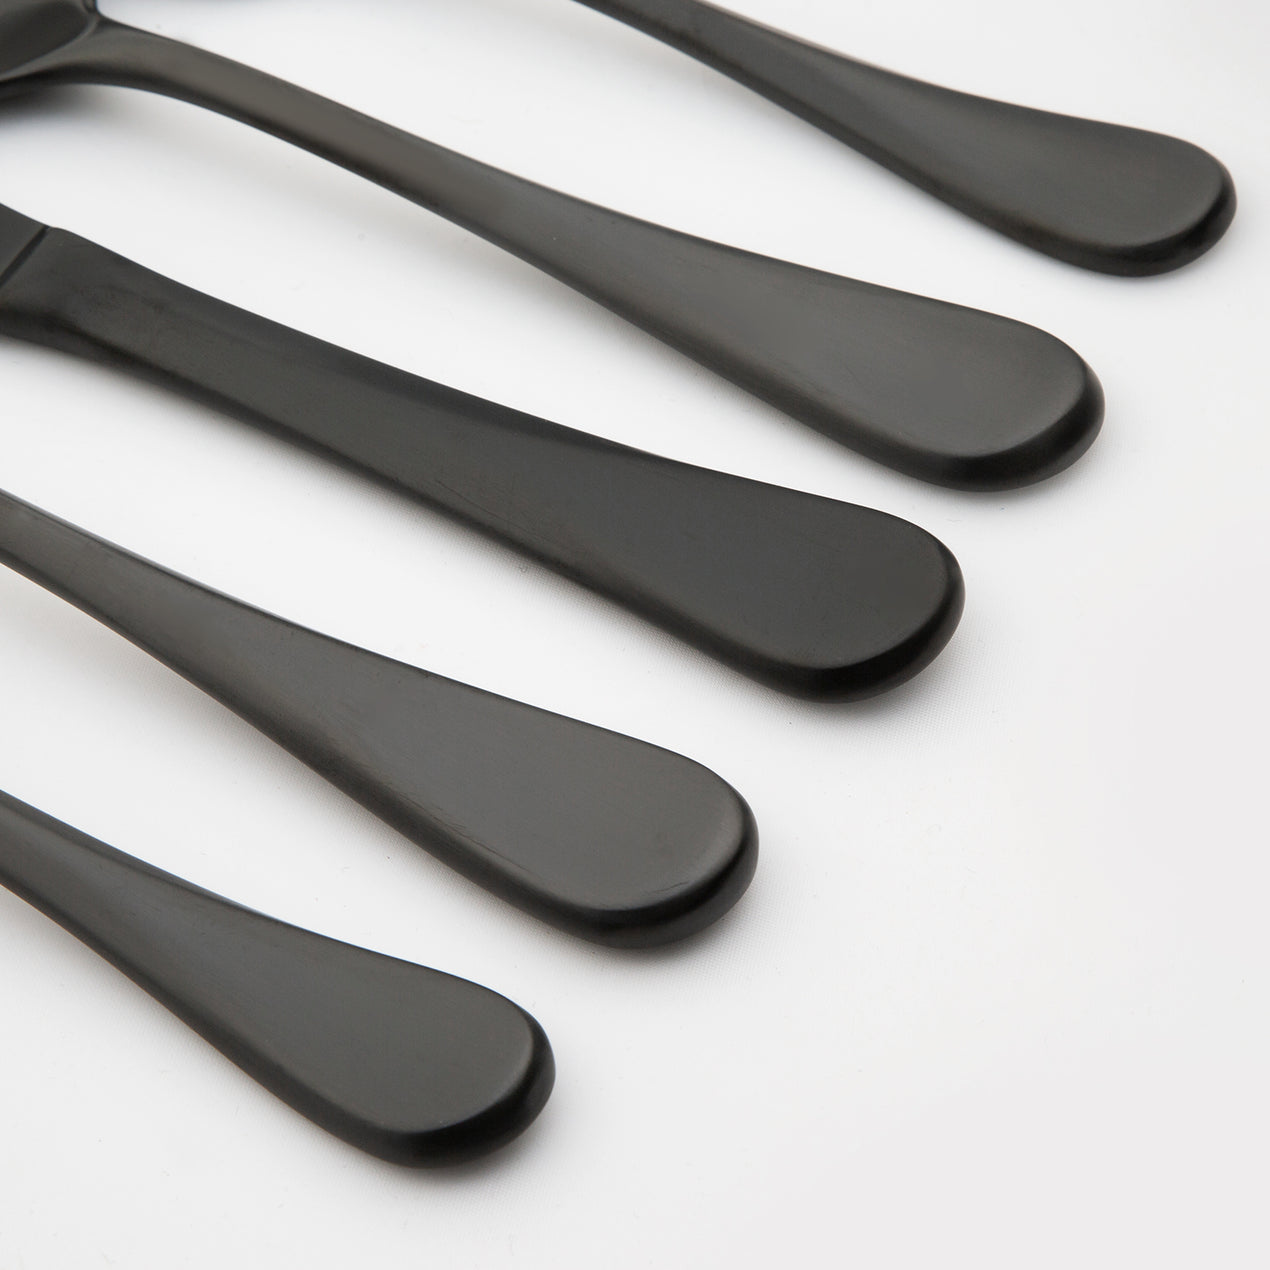 SHARECOOK matte black silverware set, satin finish 20-piece stainless steel flatware  set,kitchen utensil set